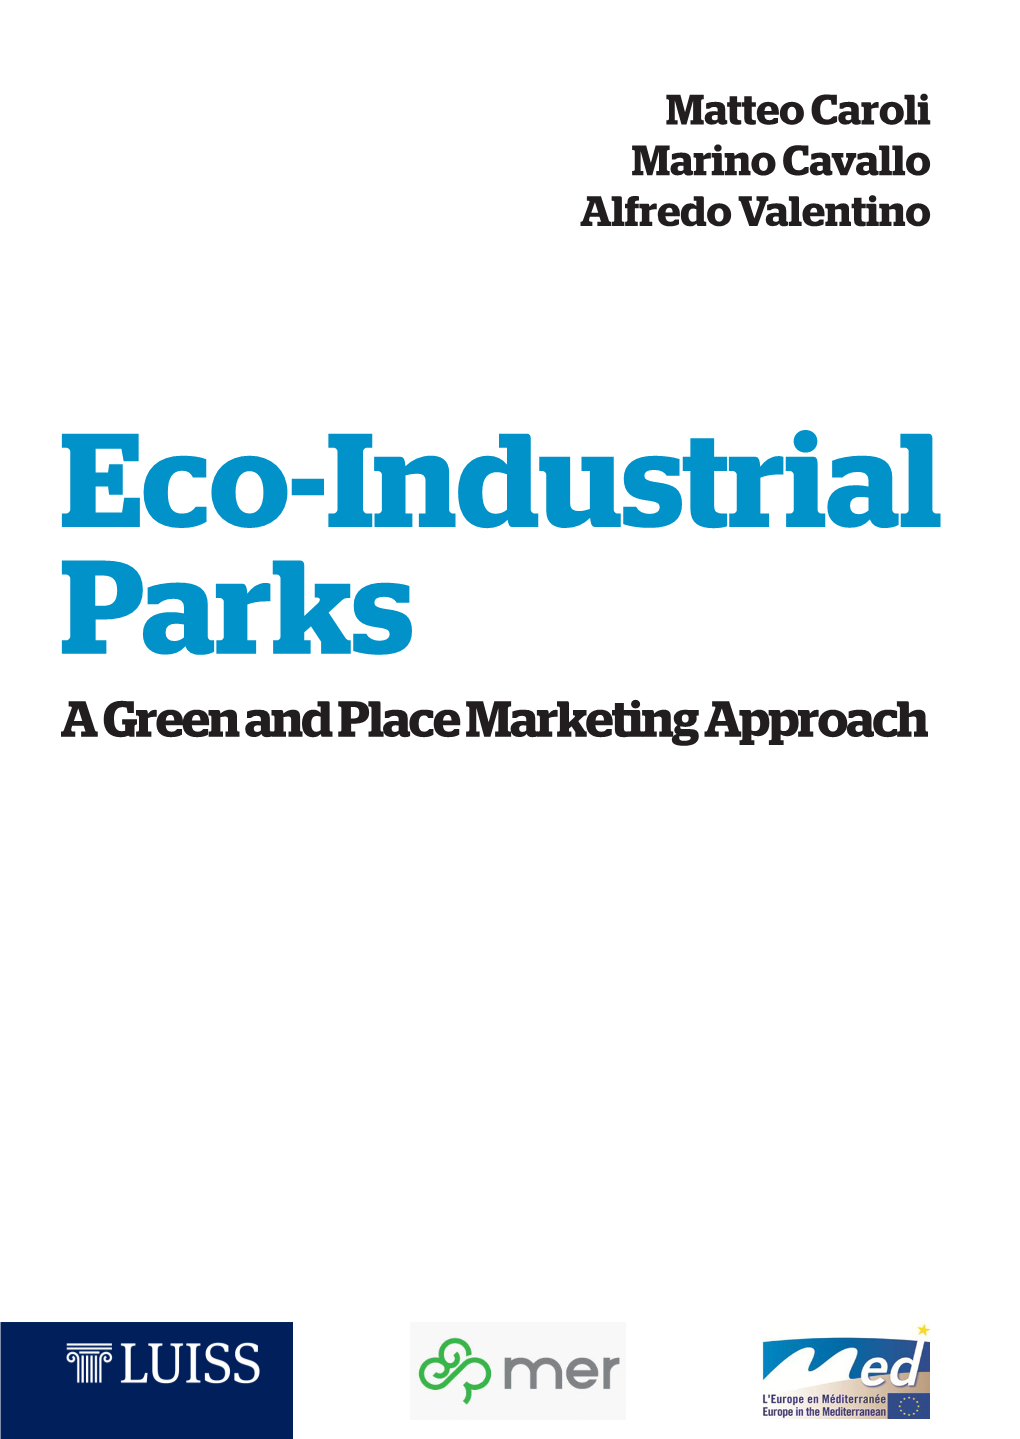 Eco-Industrial Parks a Green and Place Marketing Approach Luiss Academy Matteo Caroli Alfredo Valentino Marino Cavallo